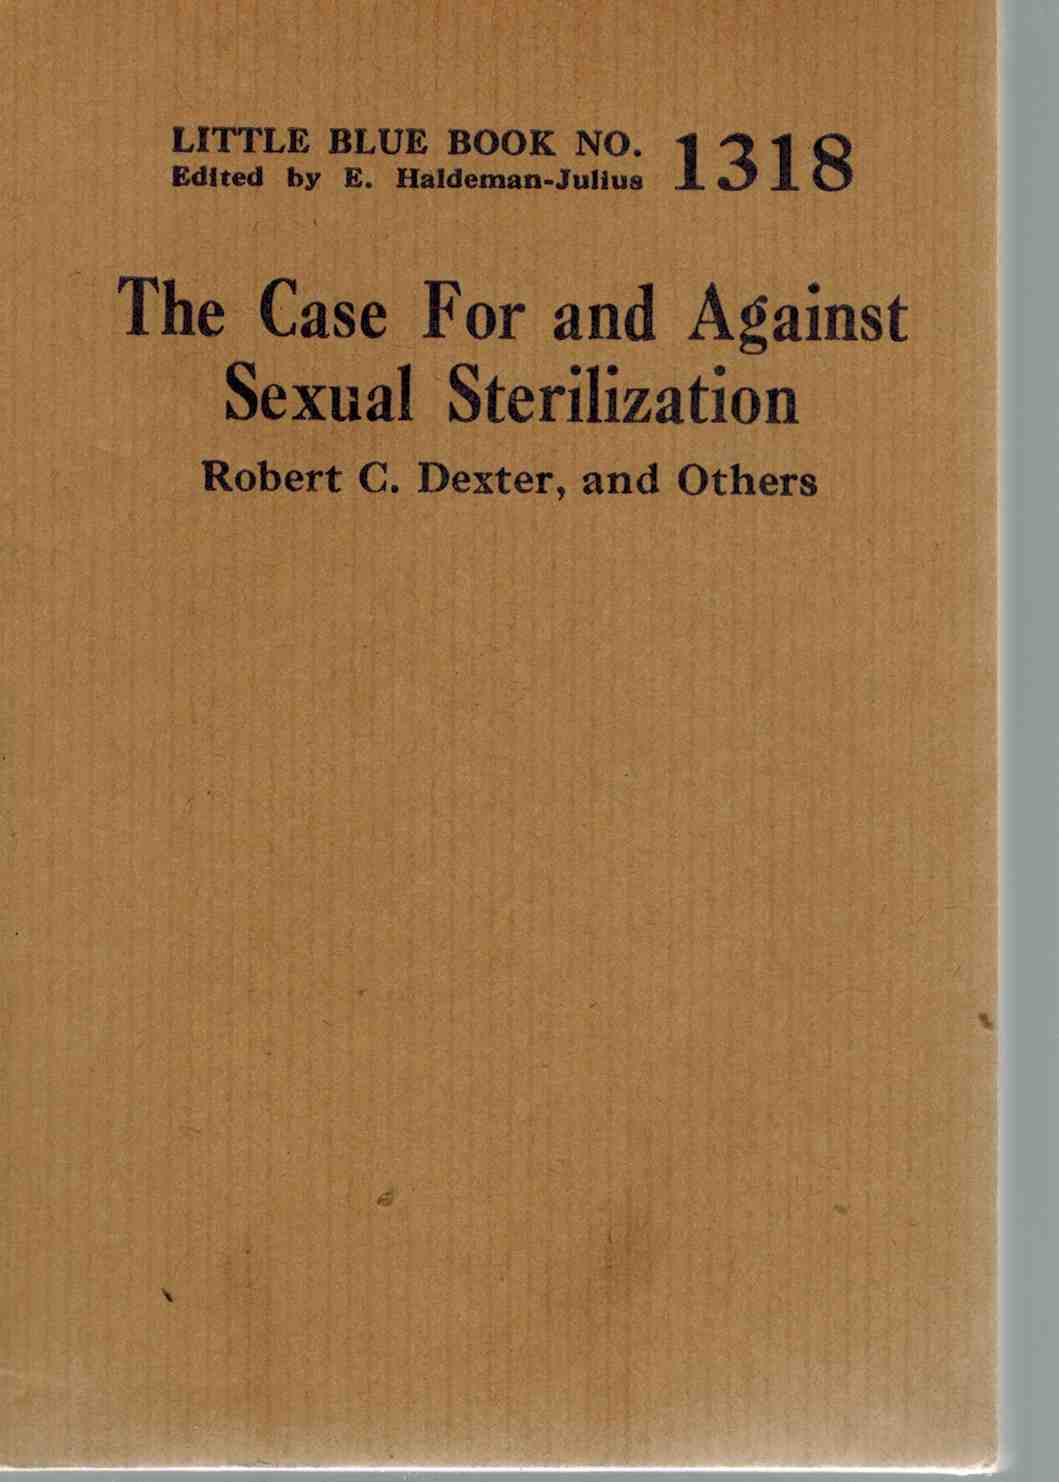 The Case Against Sexual Sterilization